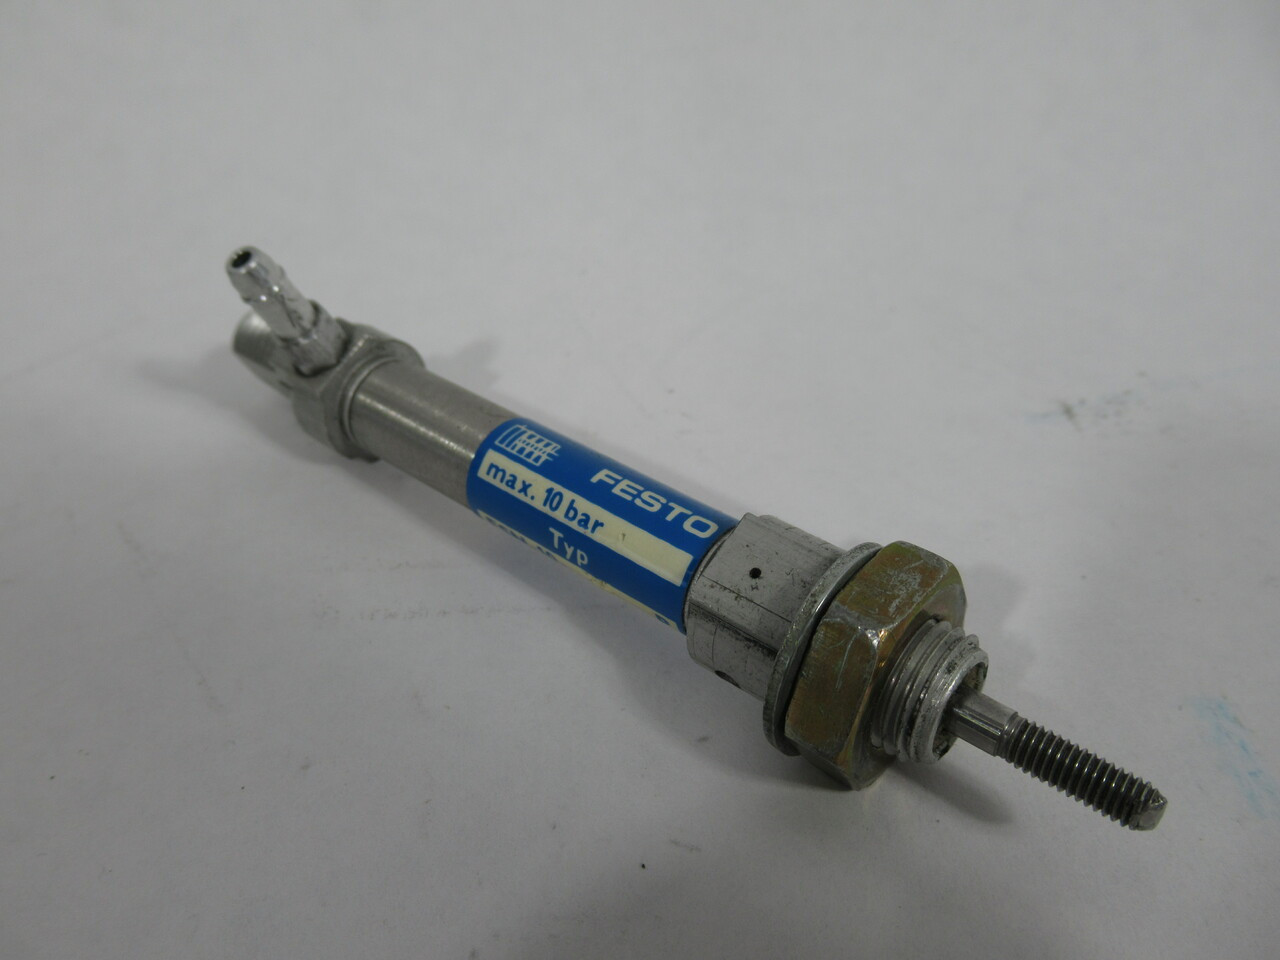 Festo ESN-10-25P 5090 Pneumatic Cylinder 10mm Bore 25mm Stroke USED